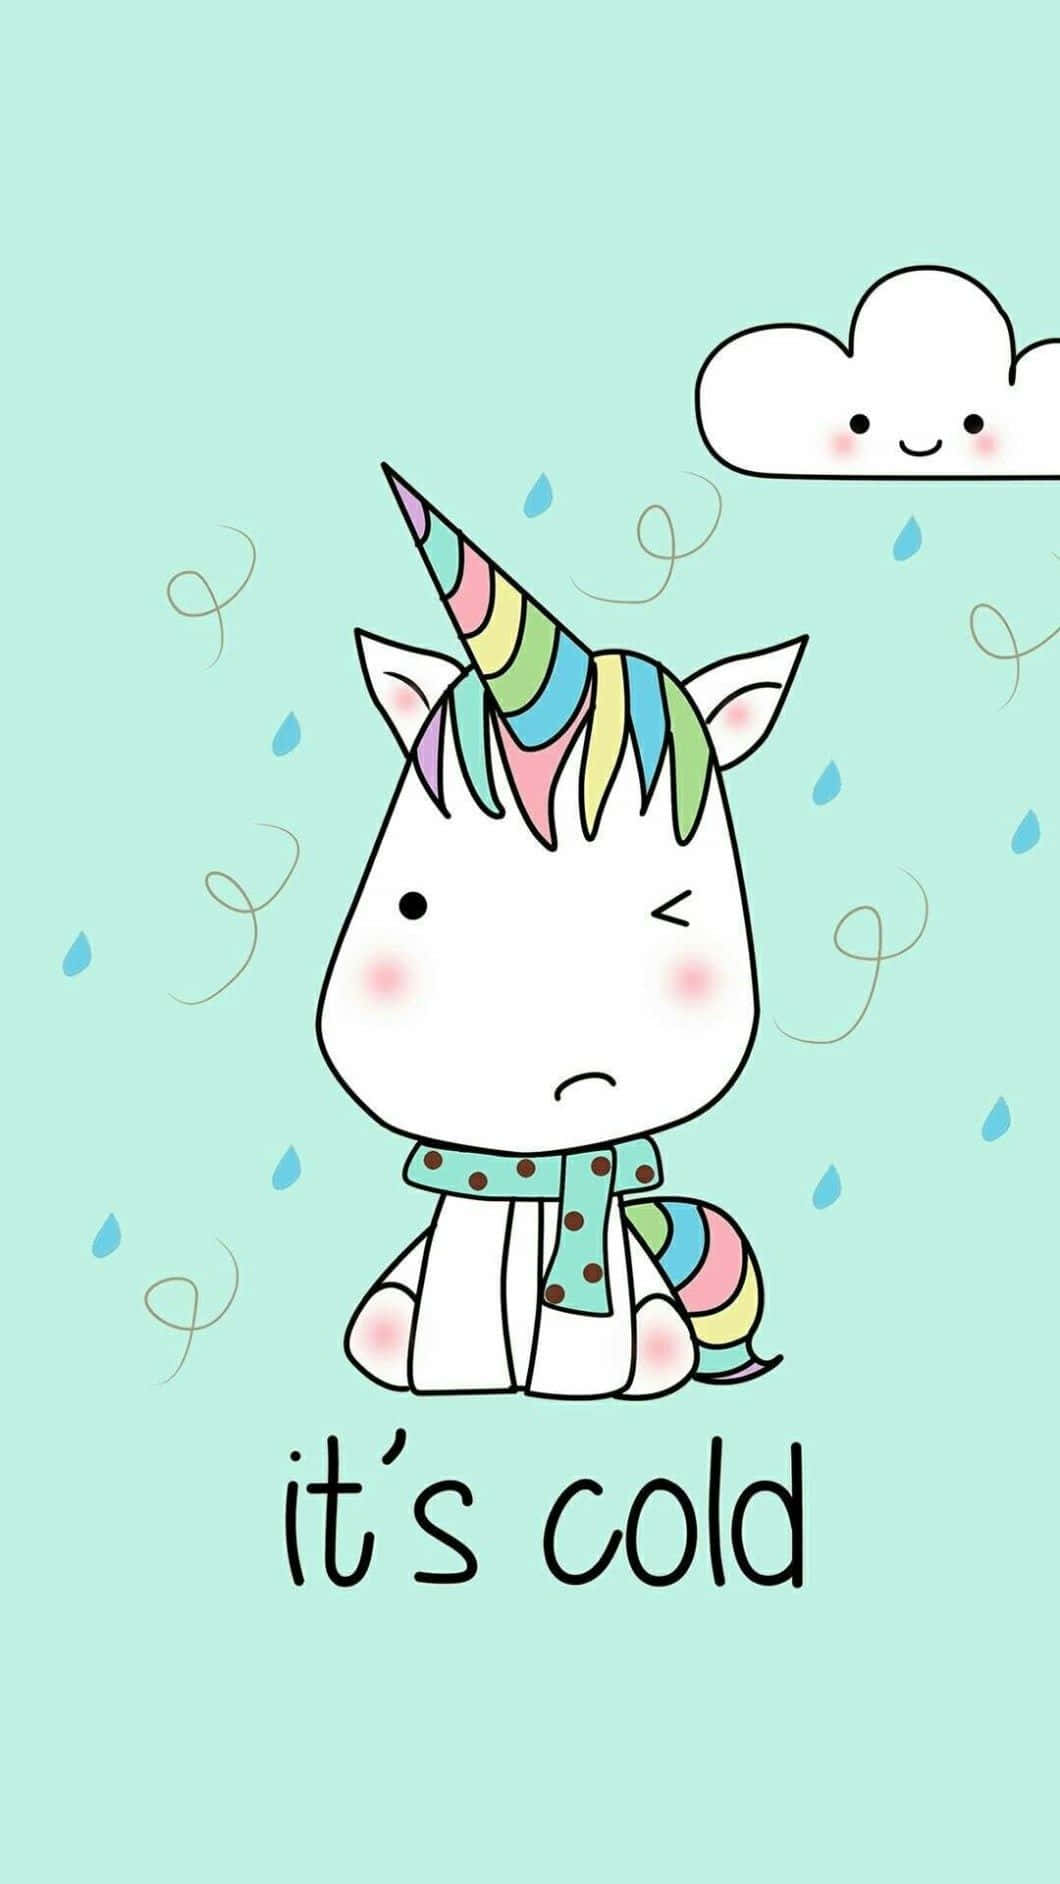 Magical Kawaii Unicorn in Dreamy Pastel Colors Wallpaper